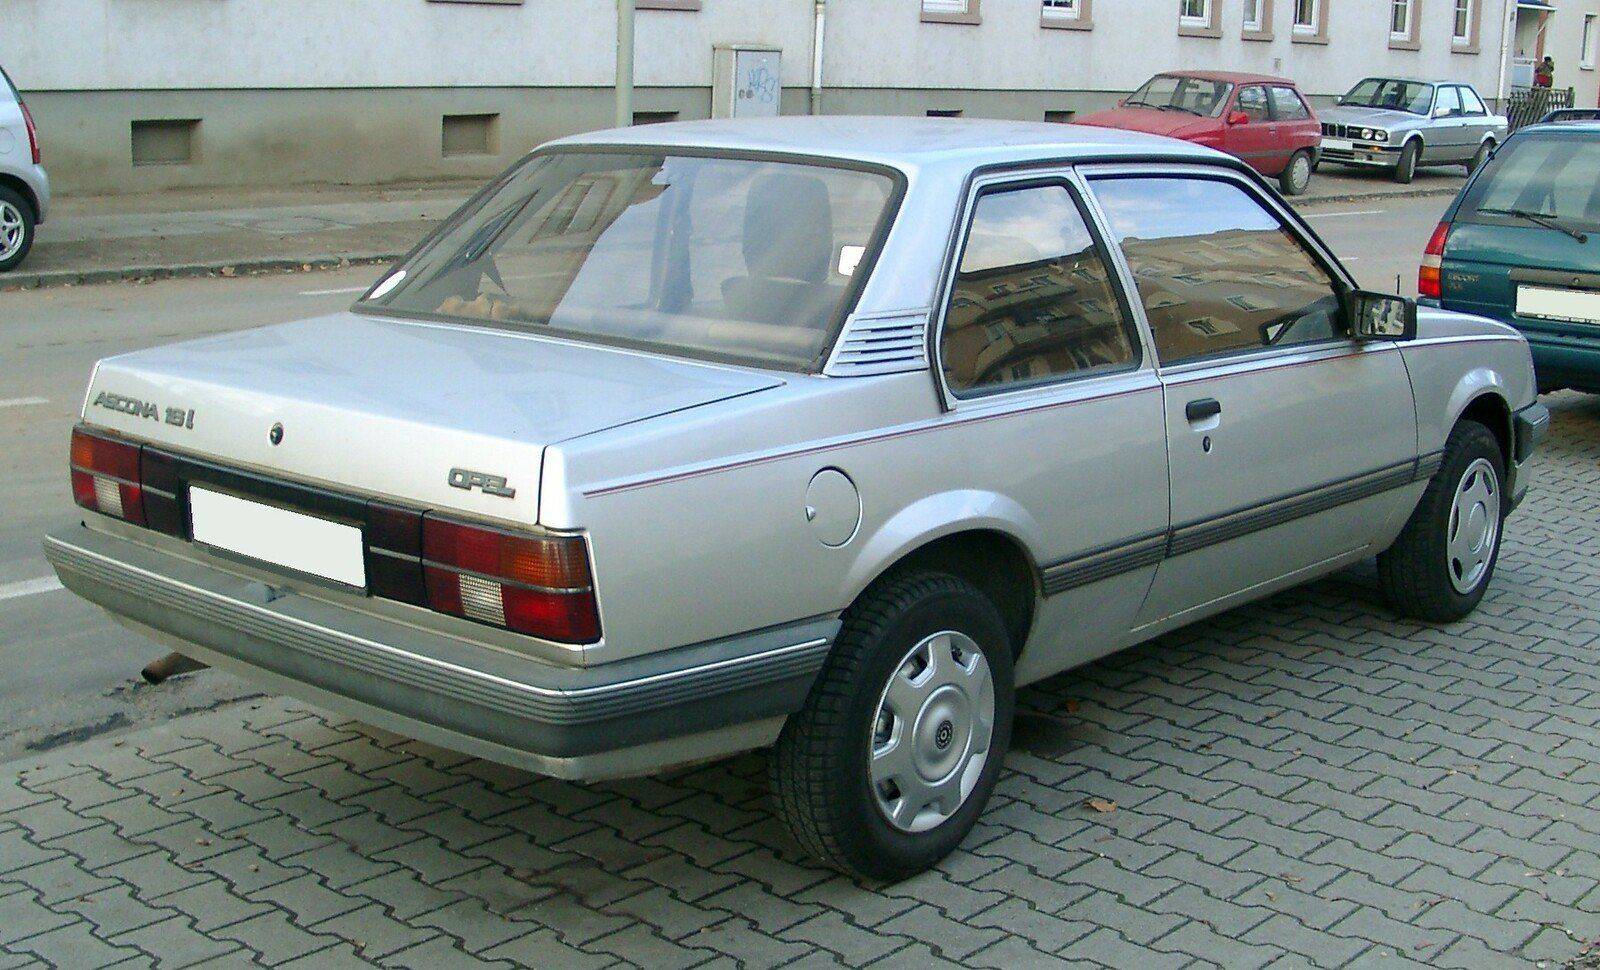 Opel_Ascona_rear_20071115.jpg